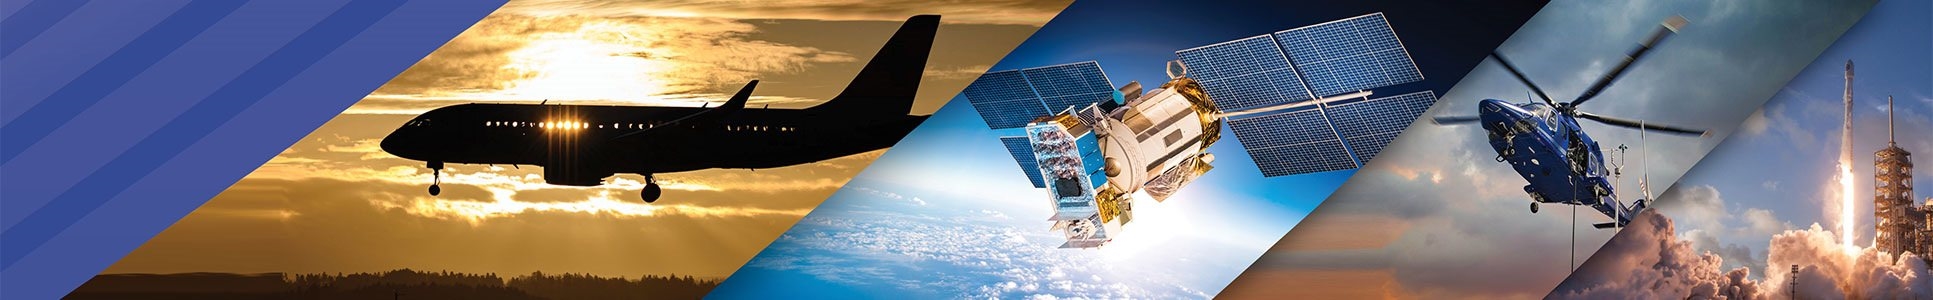 Aerospace / Aviation / Satellites